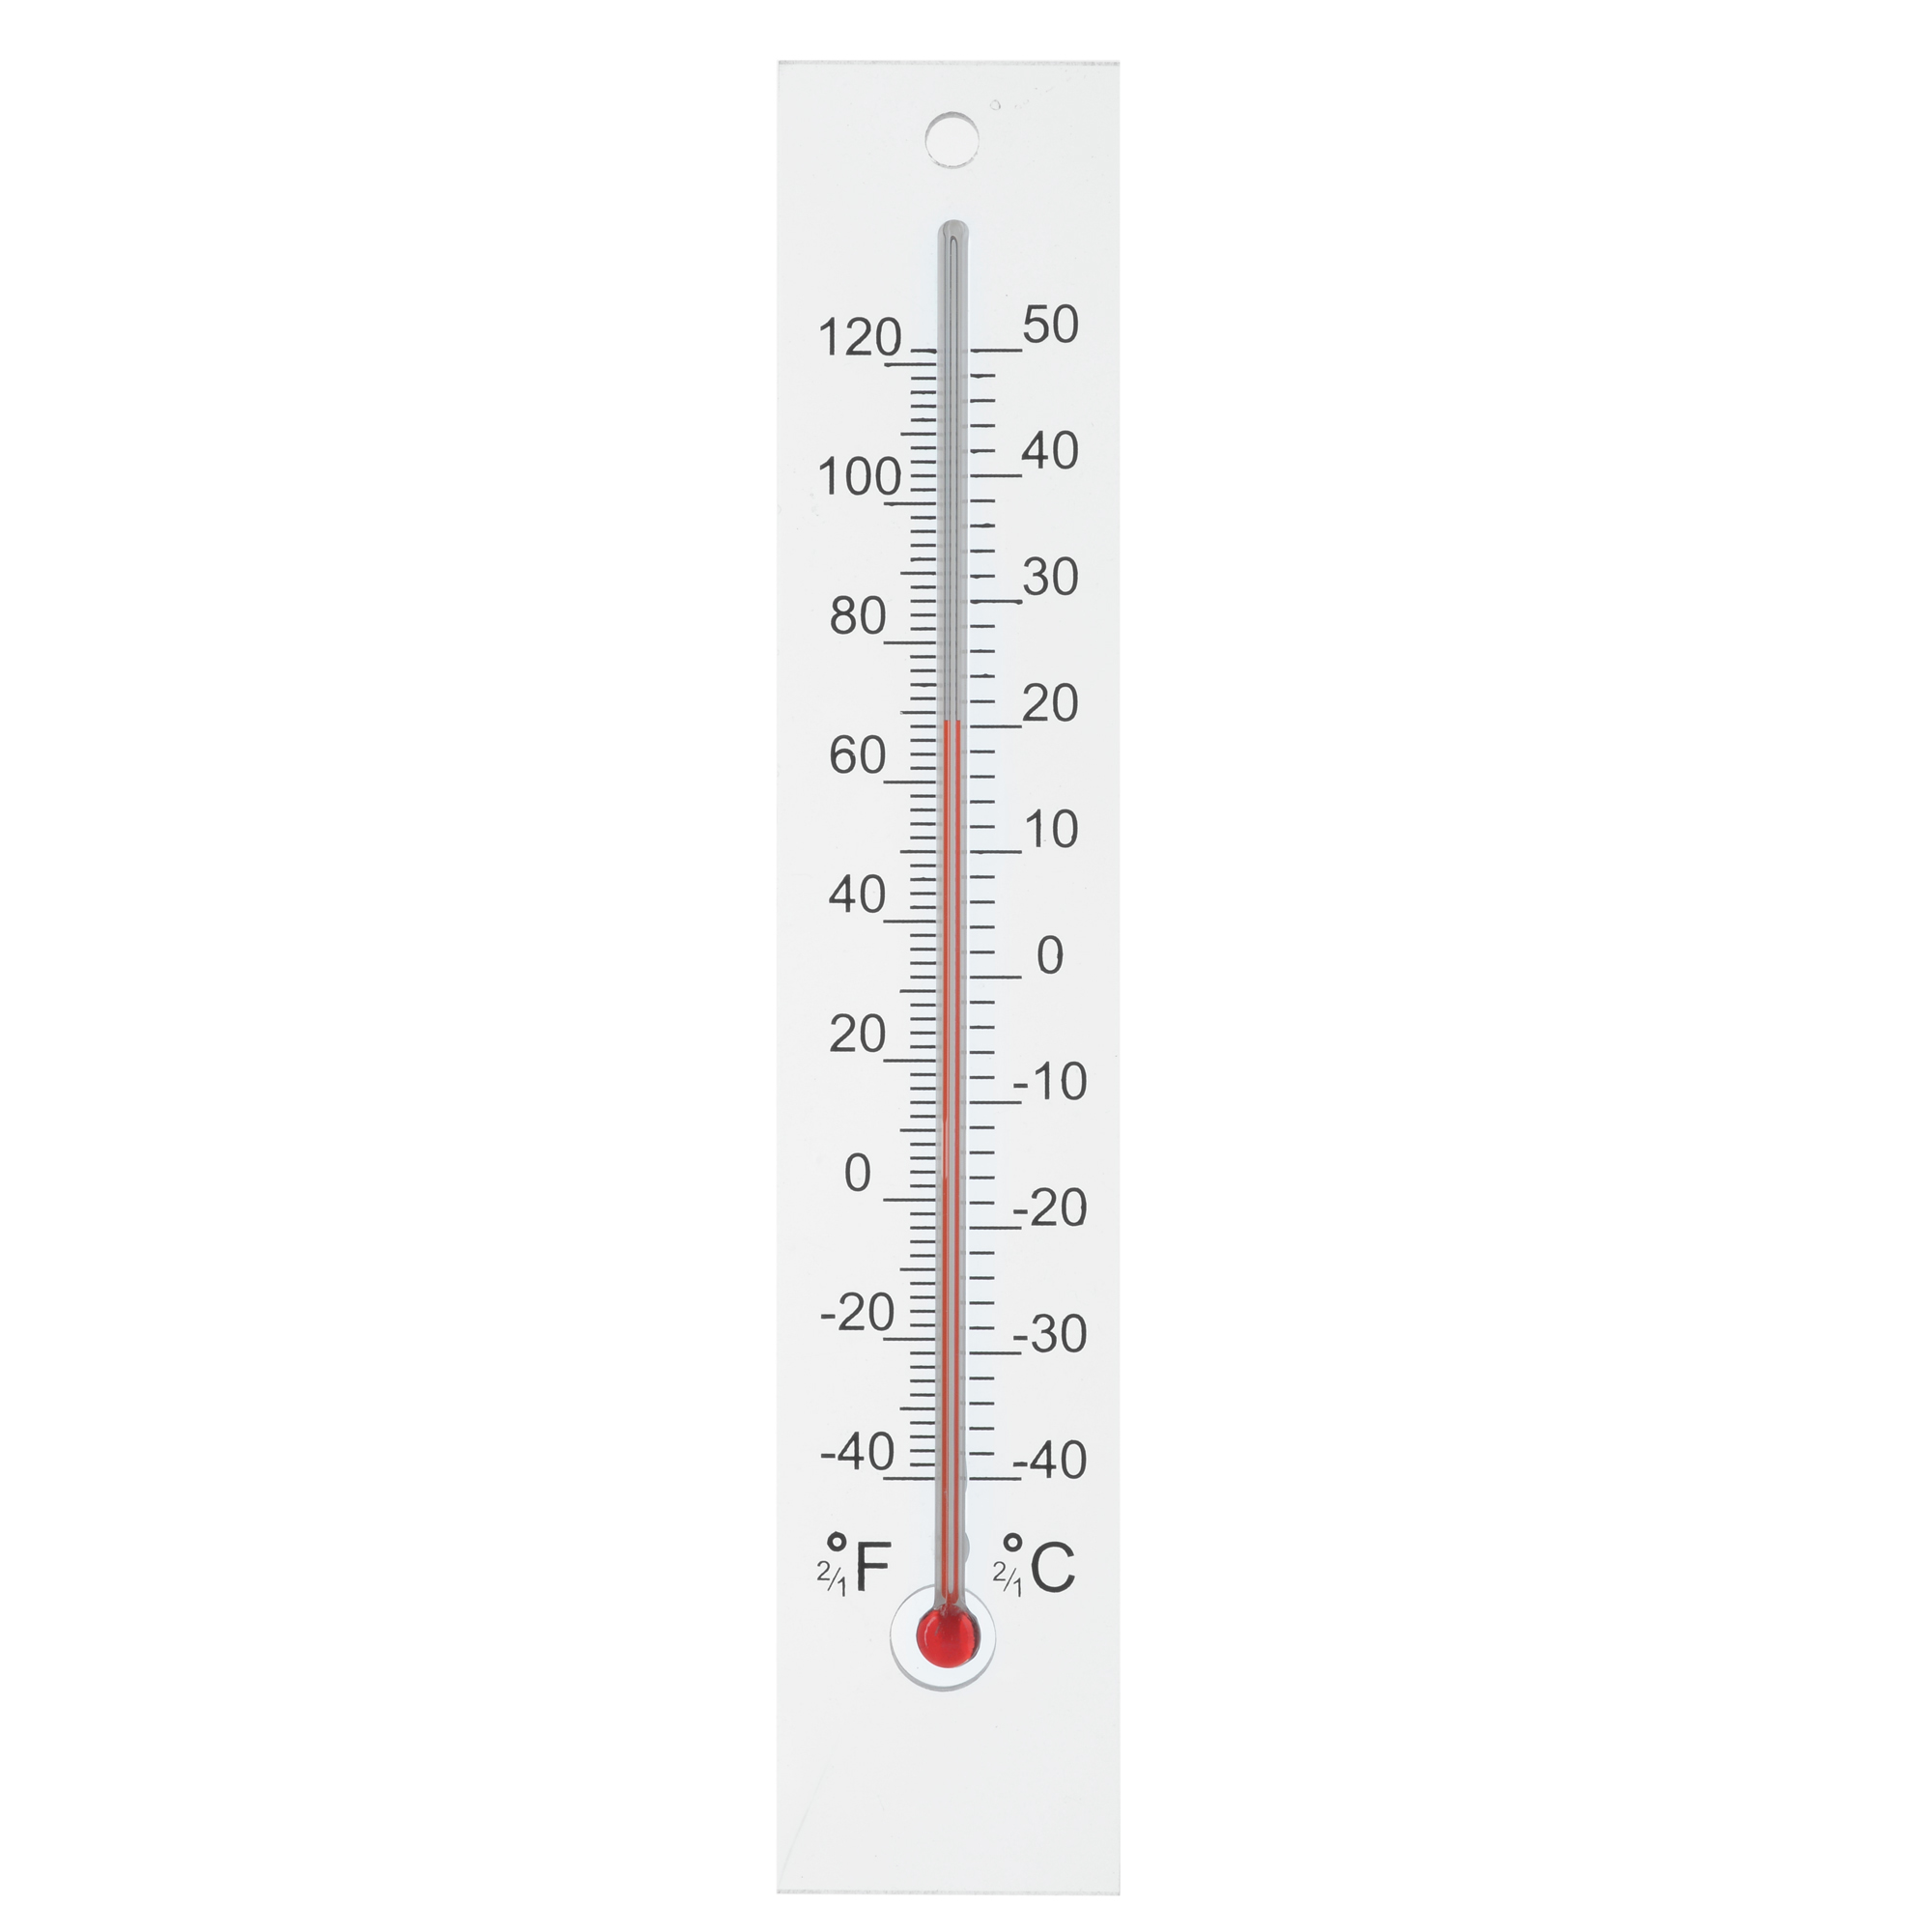 Ontbering slecht Bridge pier Thermometer kopen? Thermometers & weerstations | Praxis